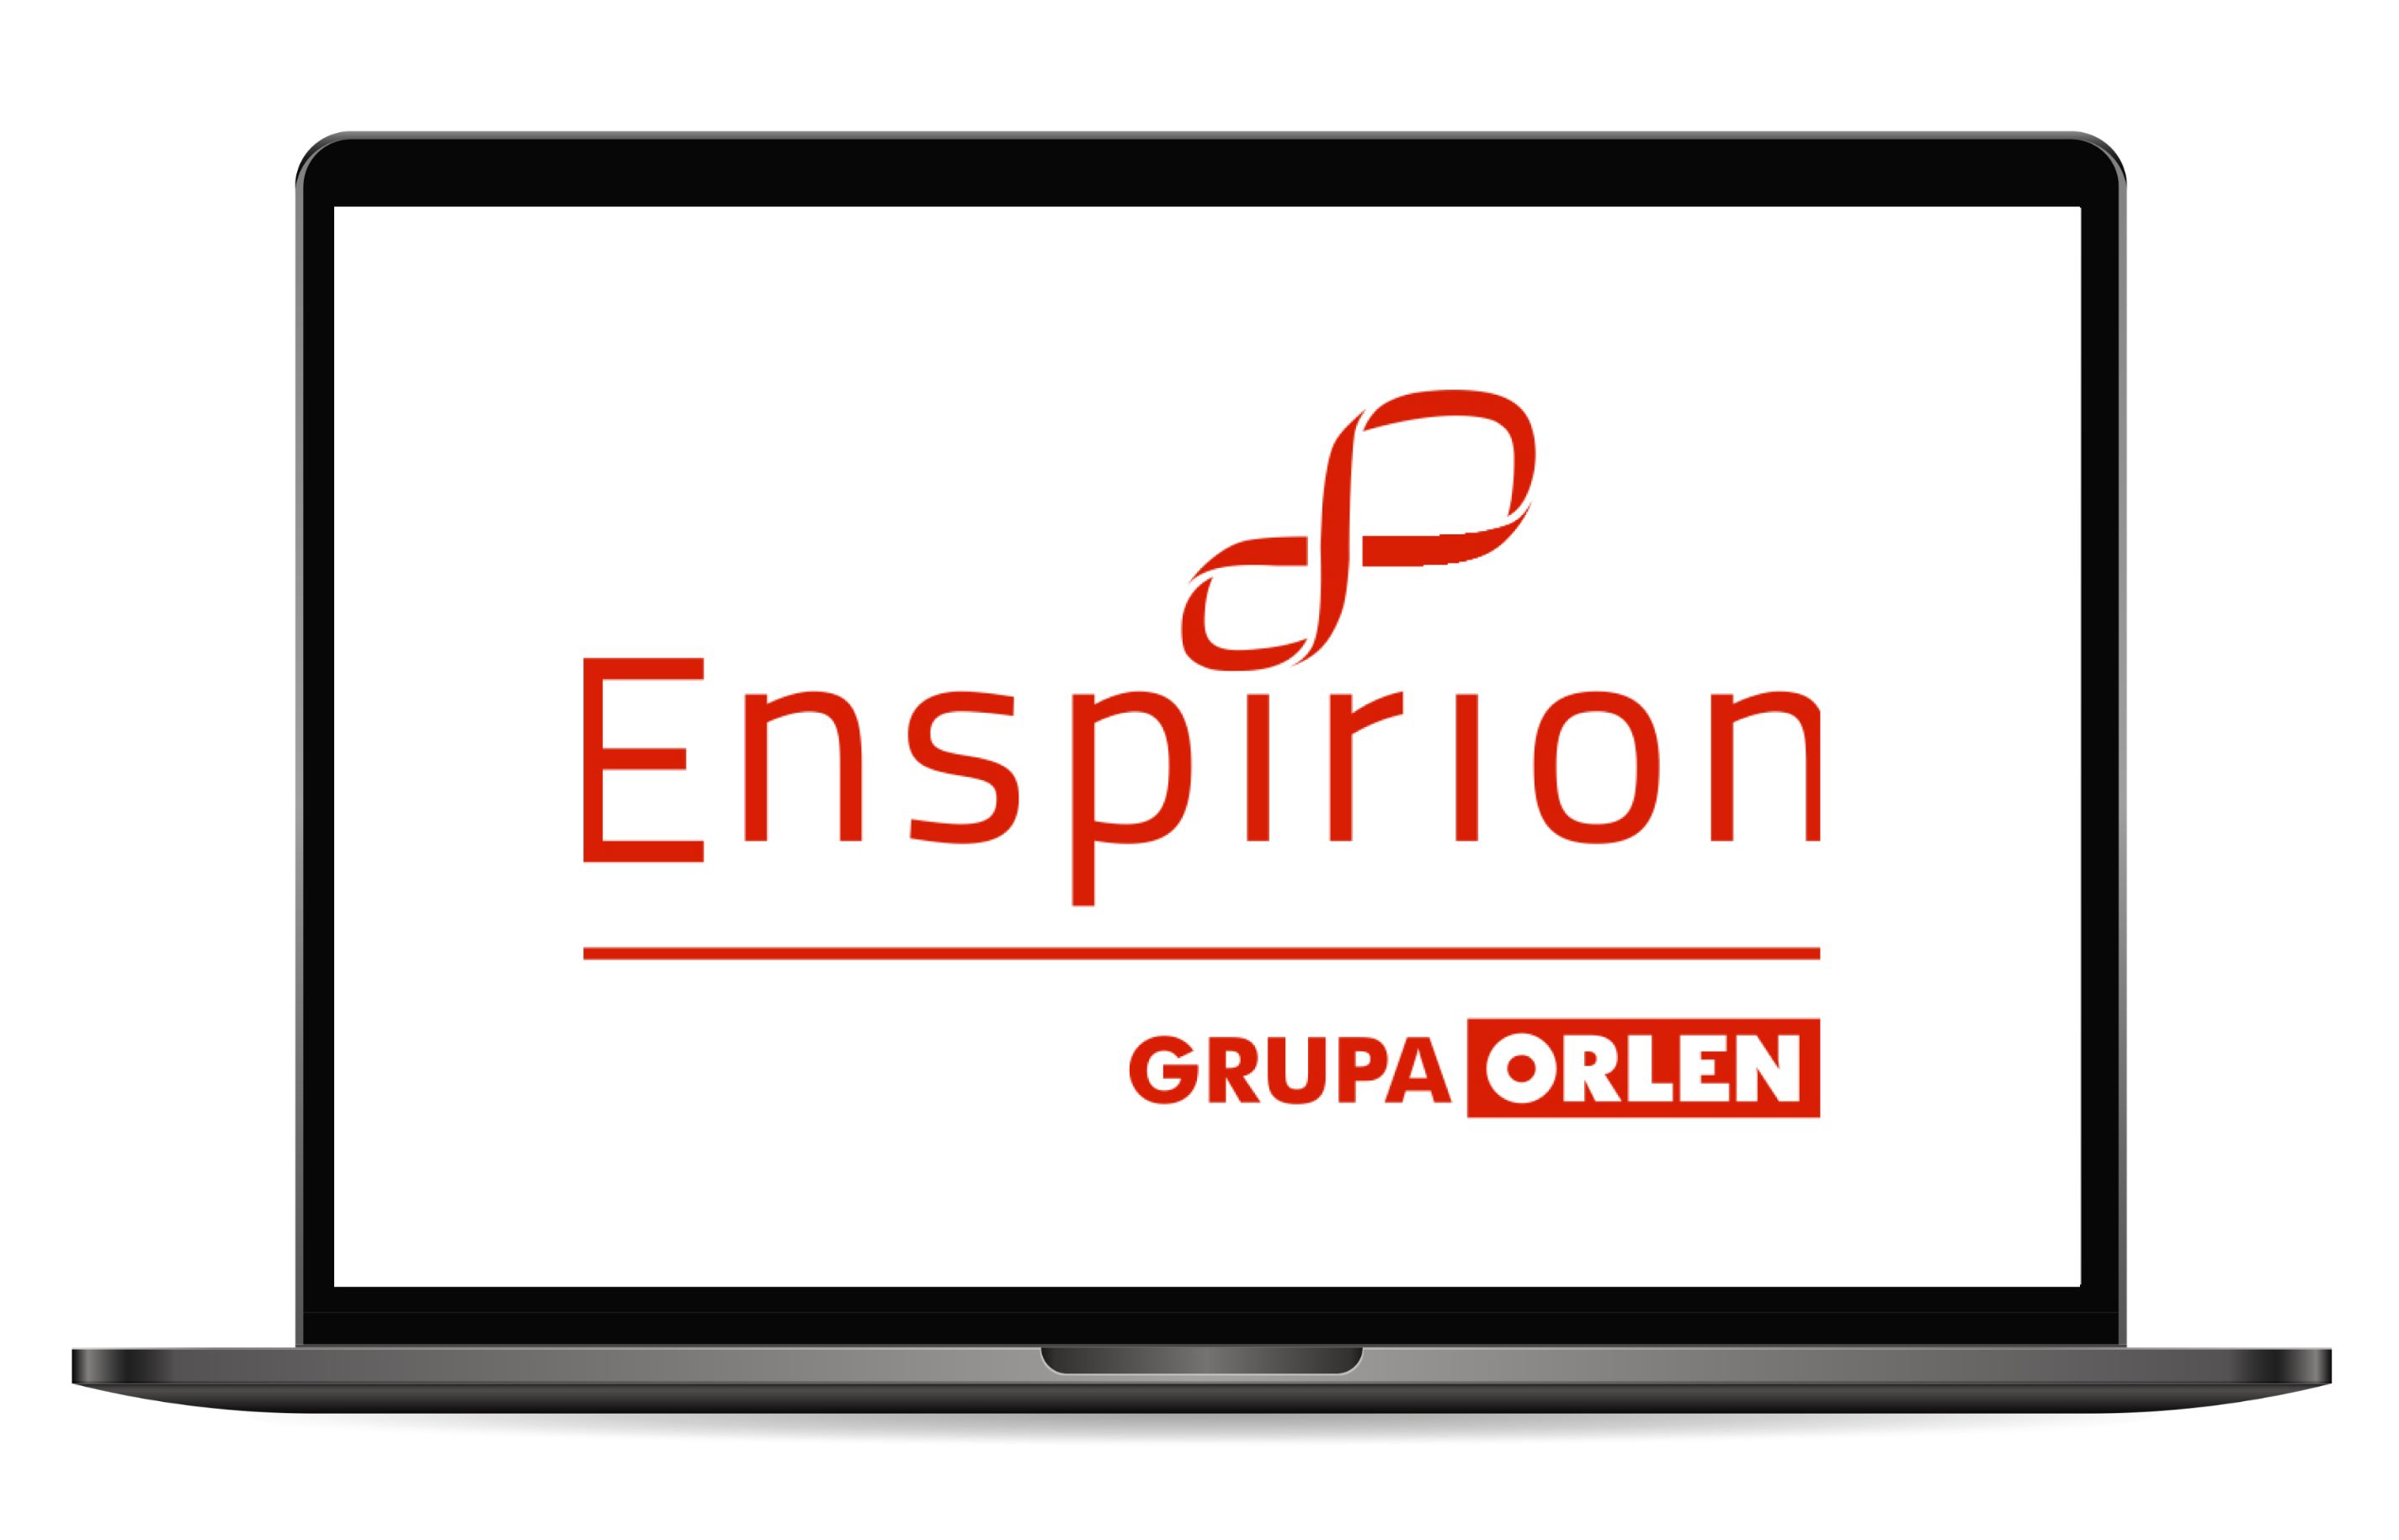 Enspirion logo